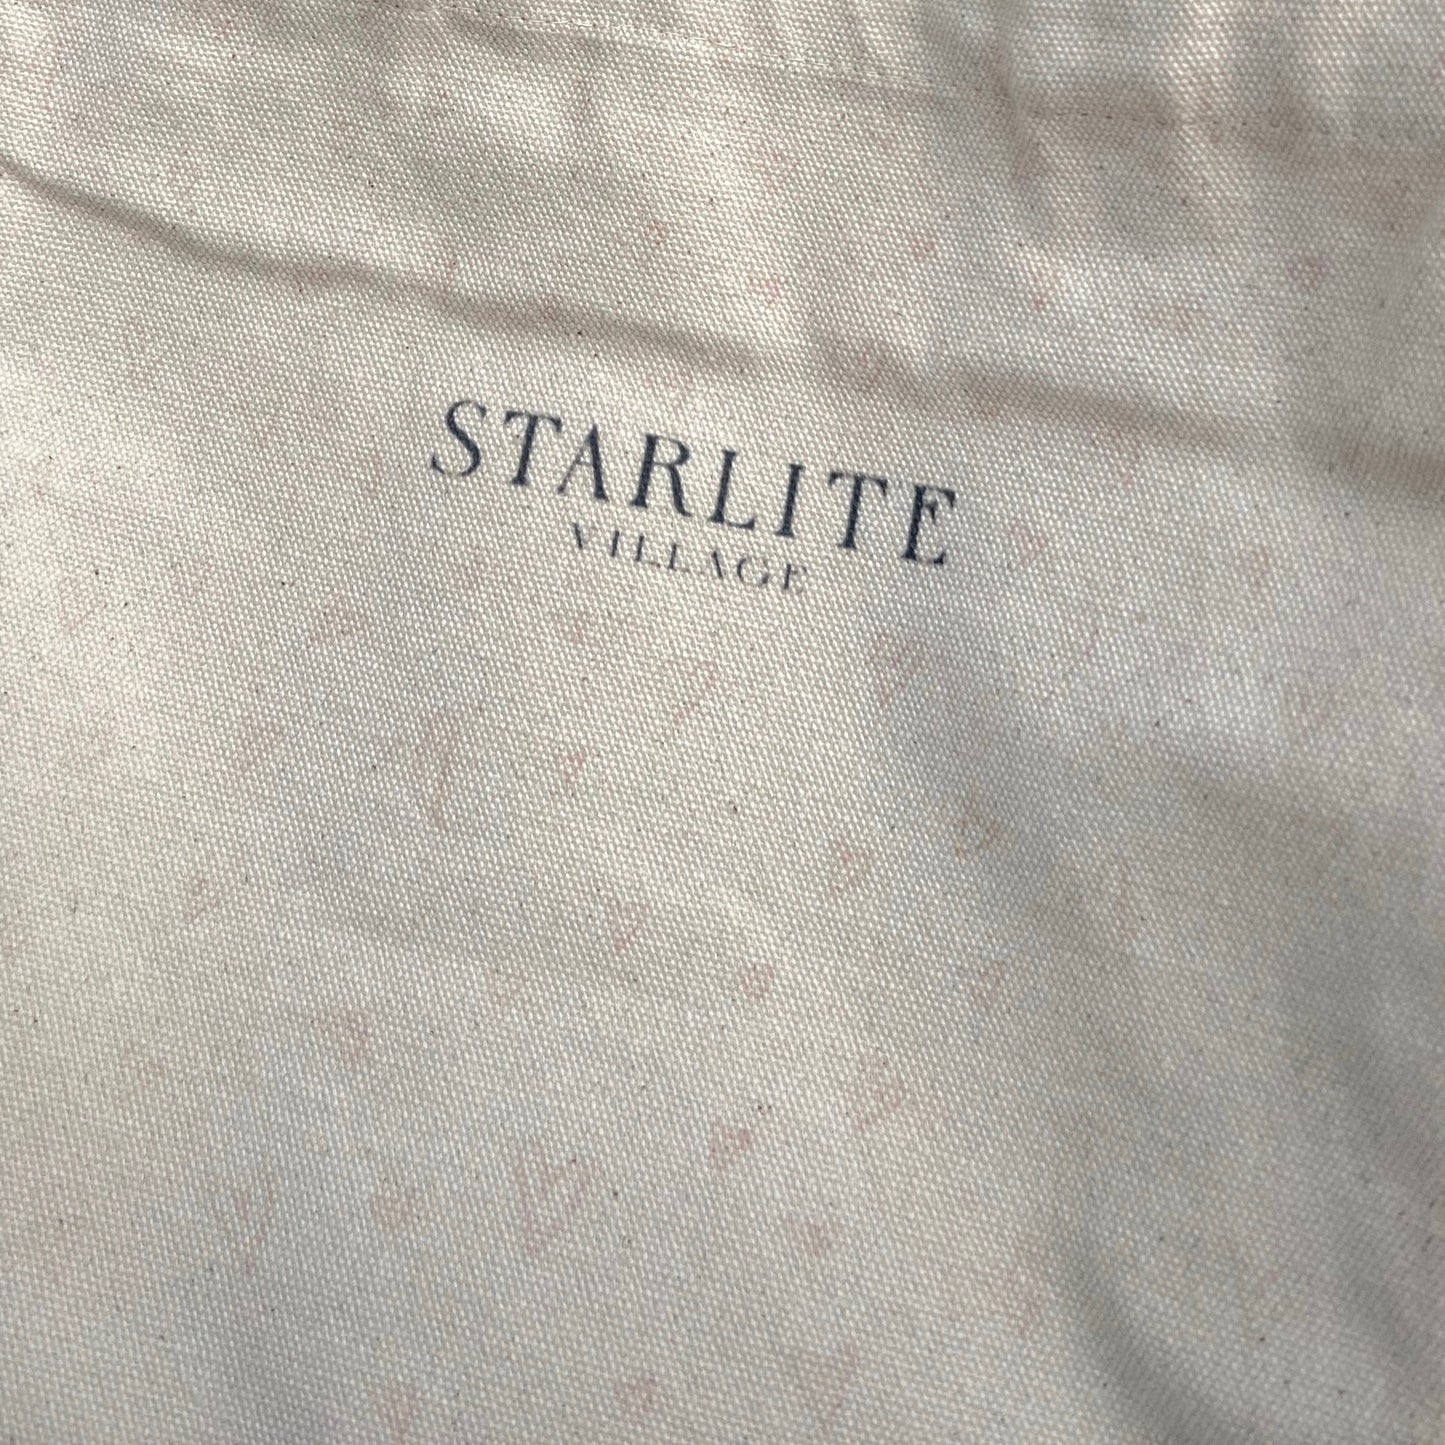 Starlite Village Logo Tote Bag